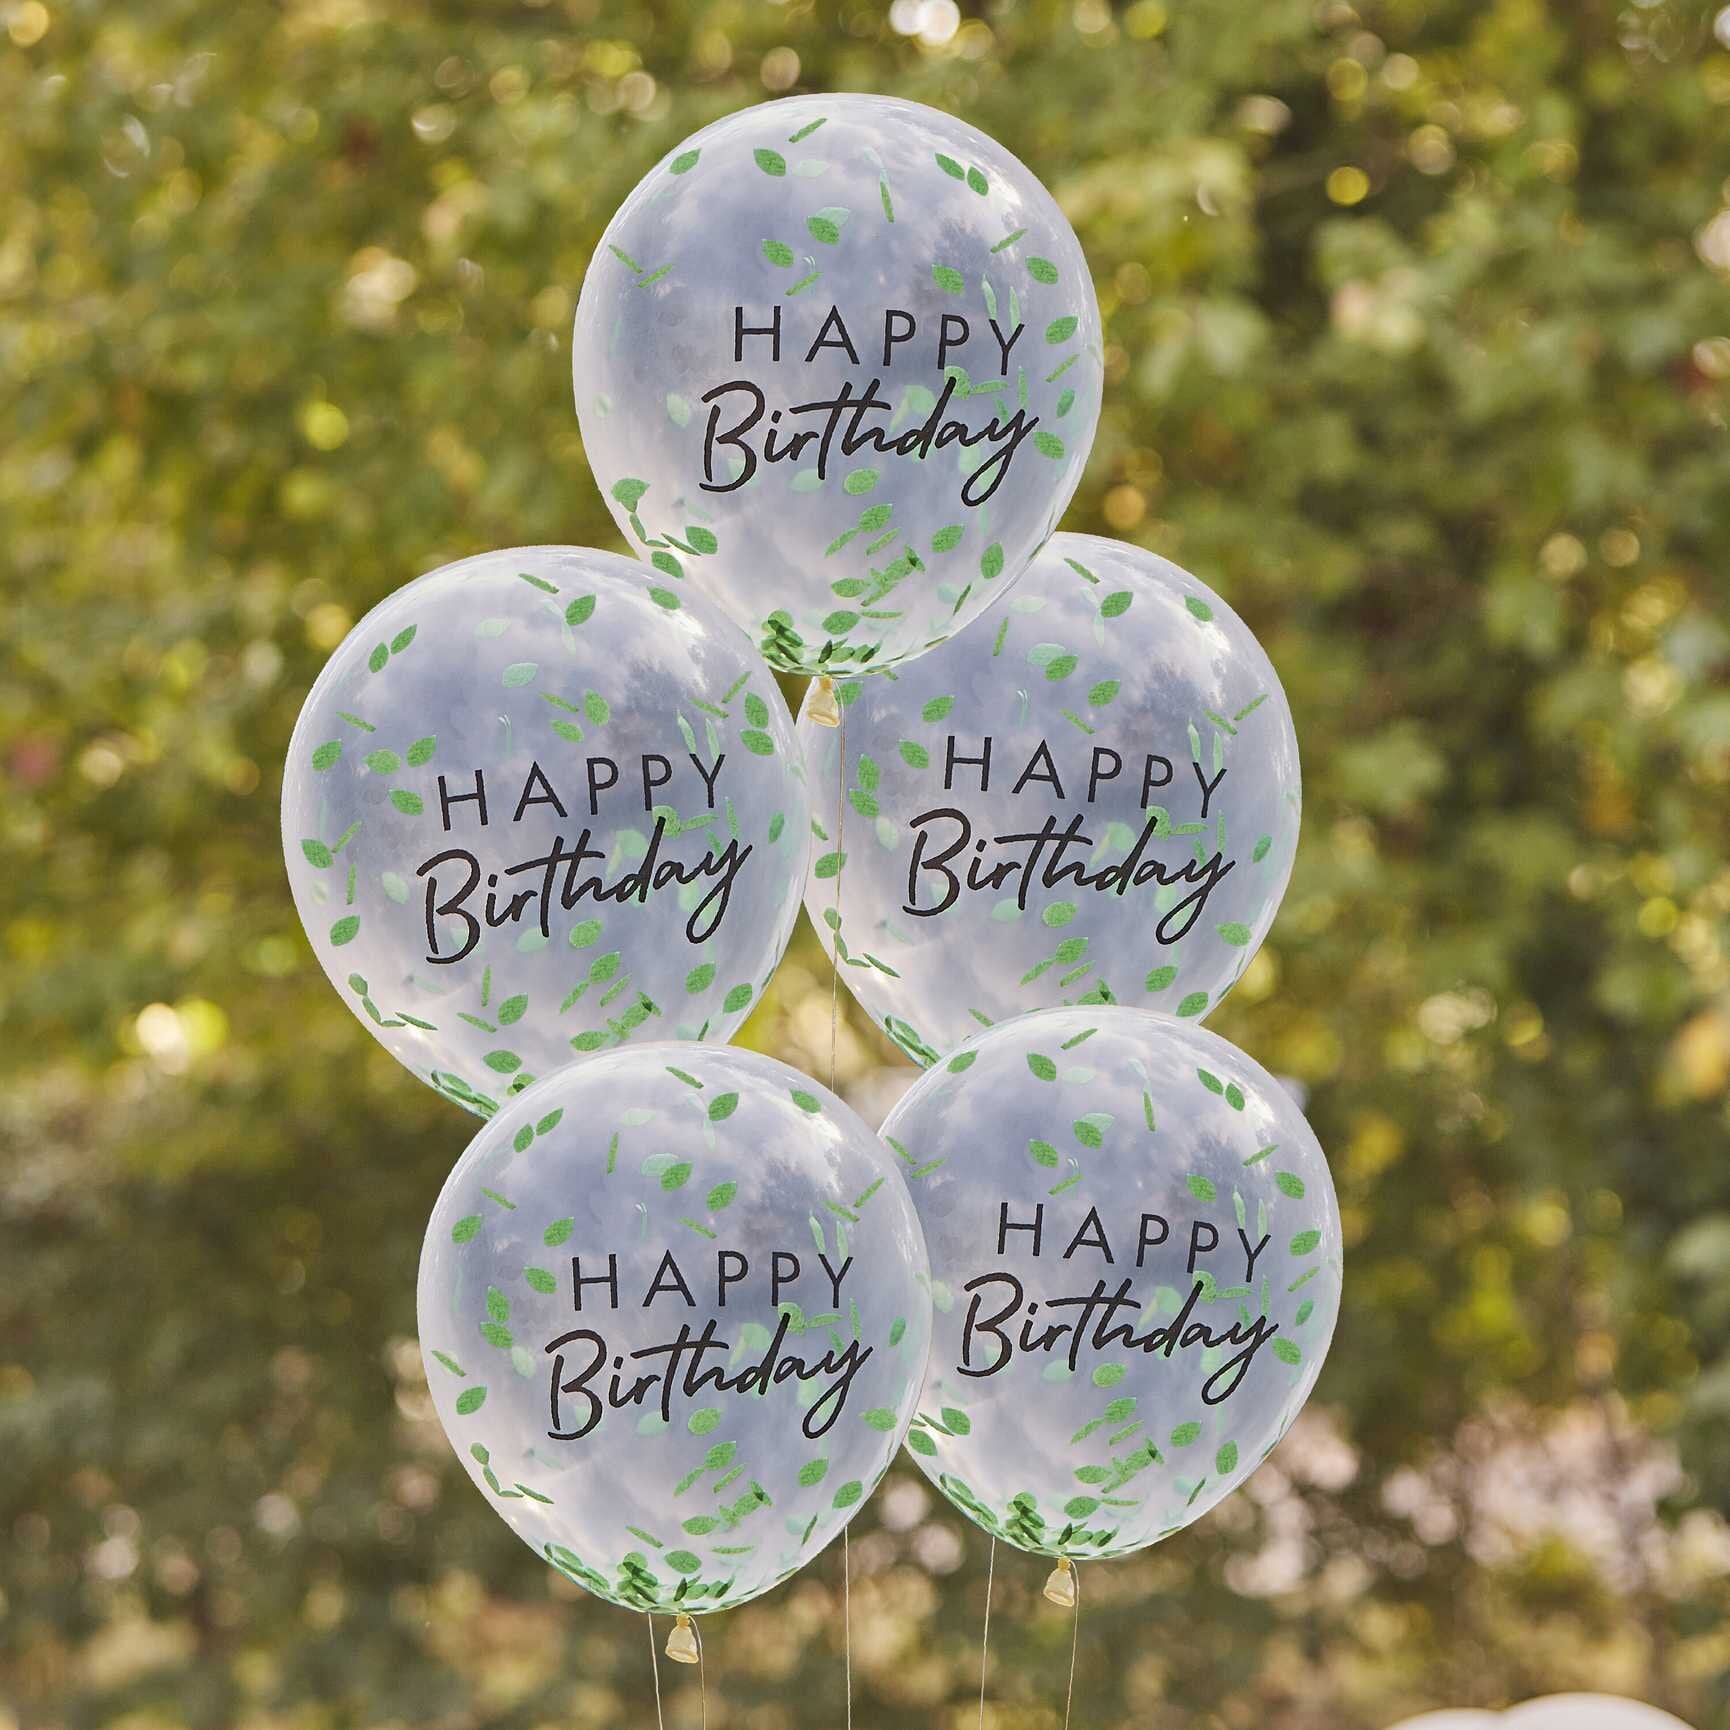 Luftballons "Happy Birthday“ mit Blattkonfetti im 5er Pack